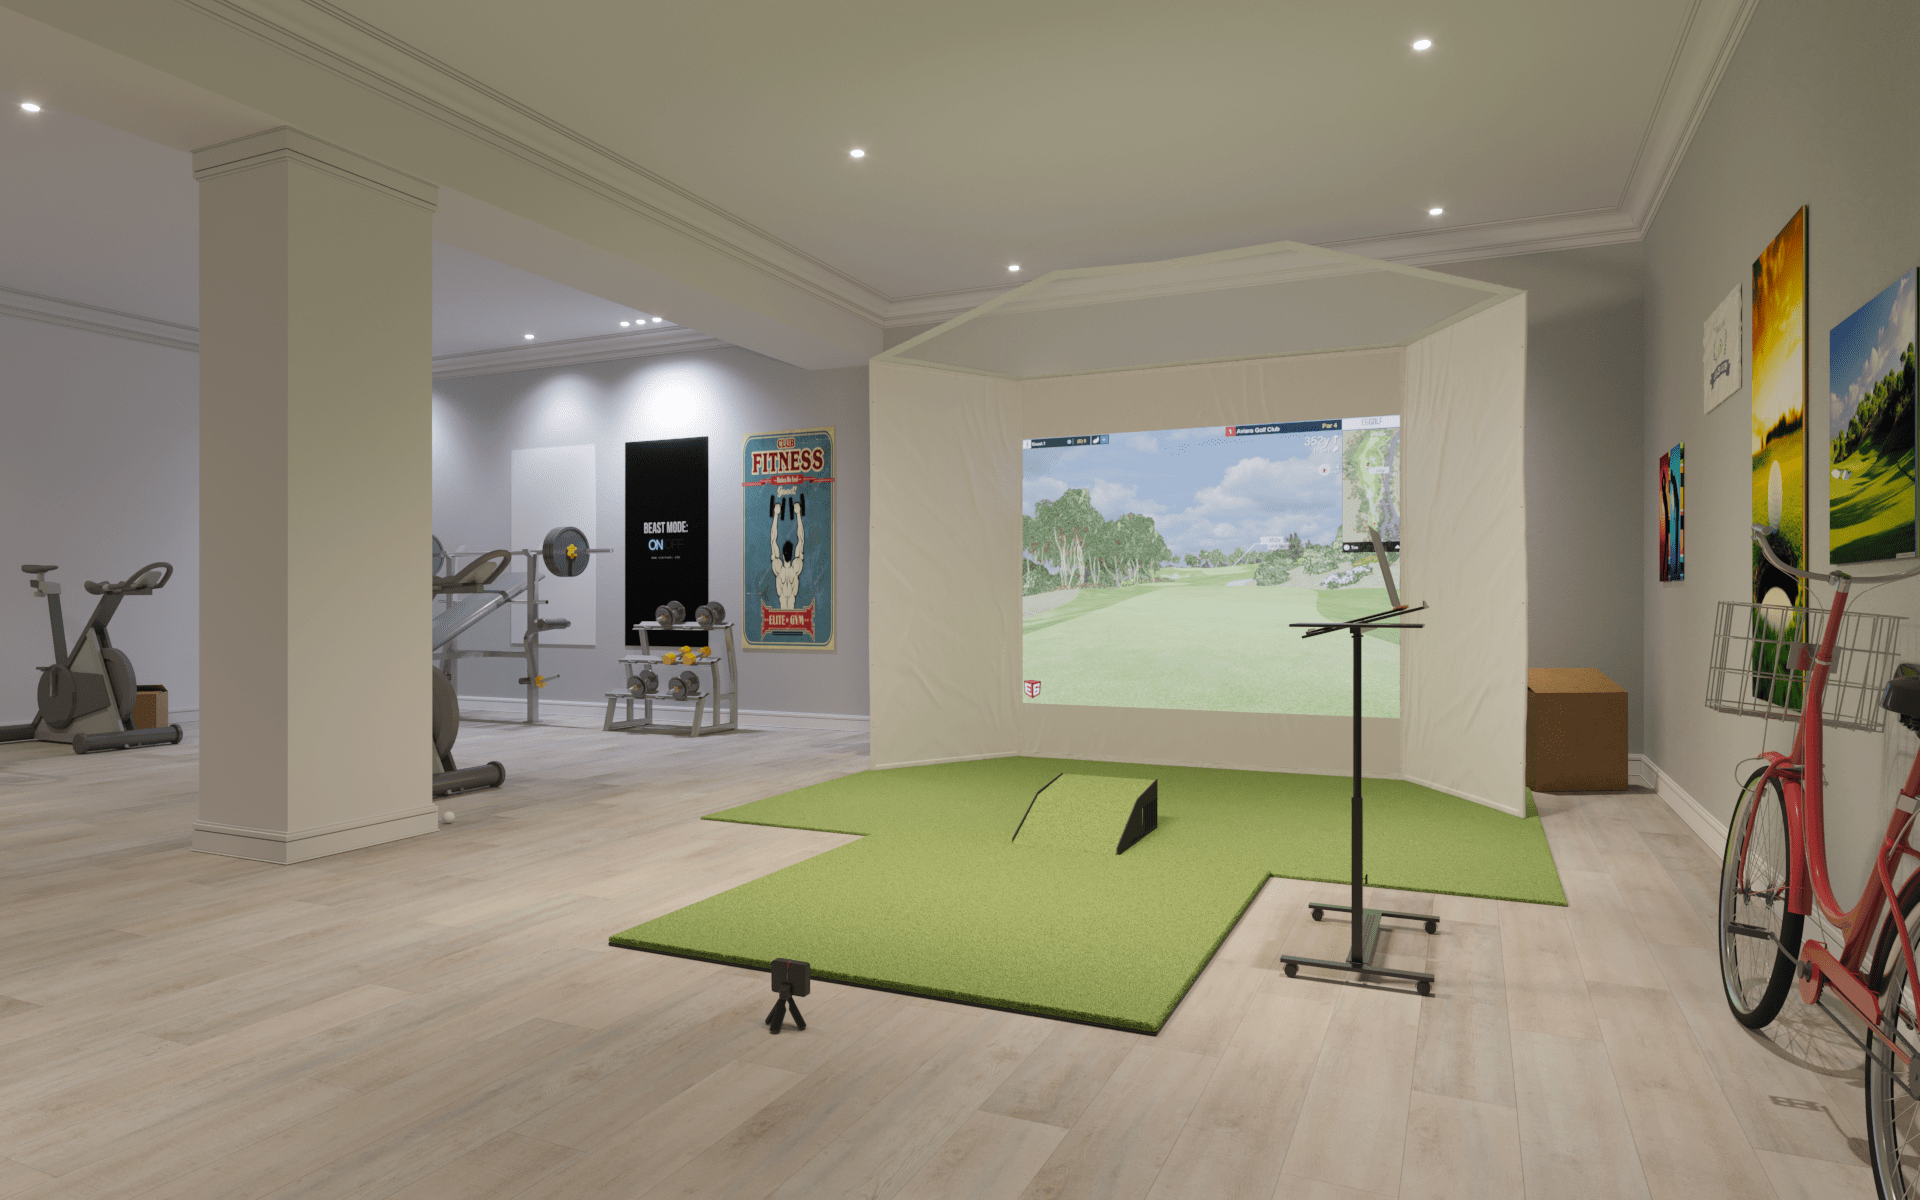 Garmin R10 Retractable Golf Simulator Package